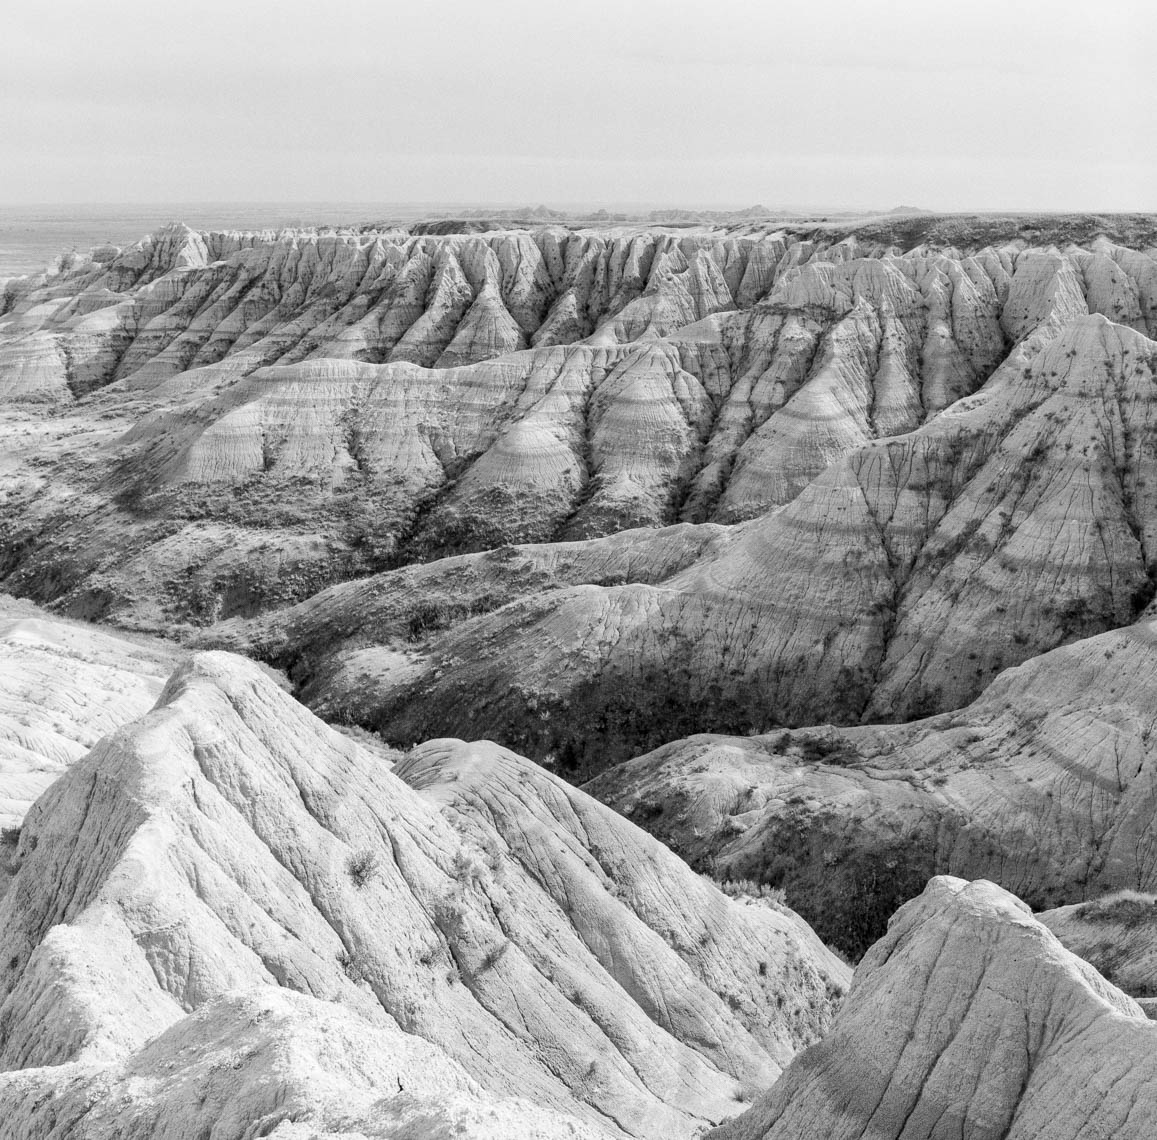 View of the Badlands, South Dakota.